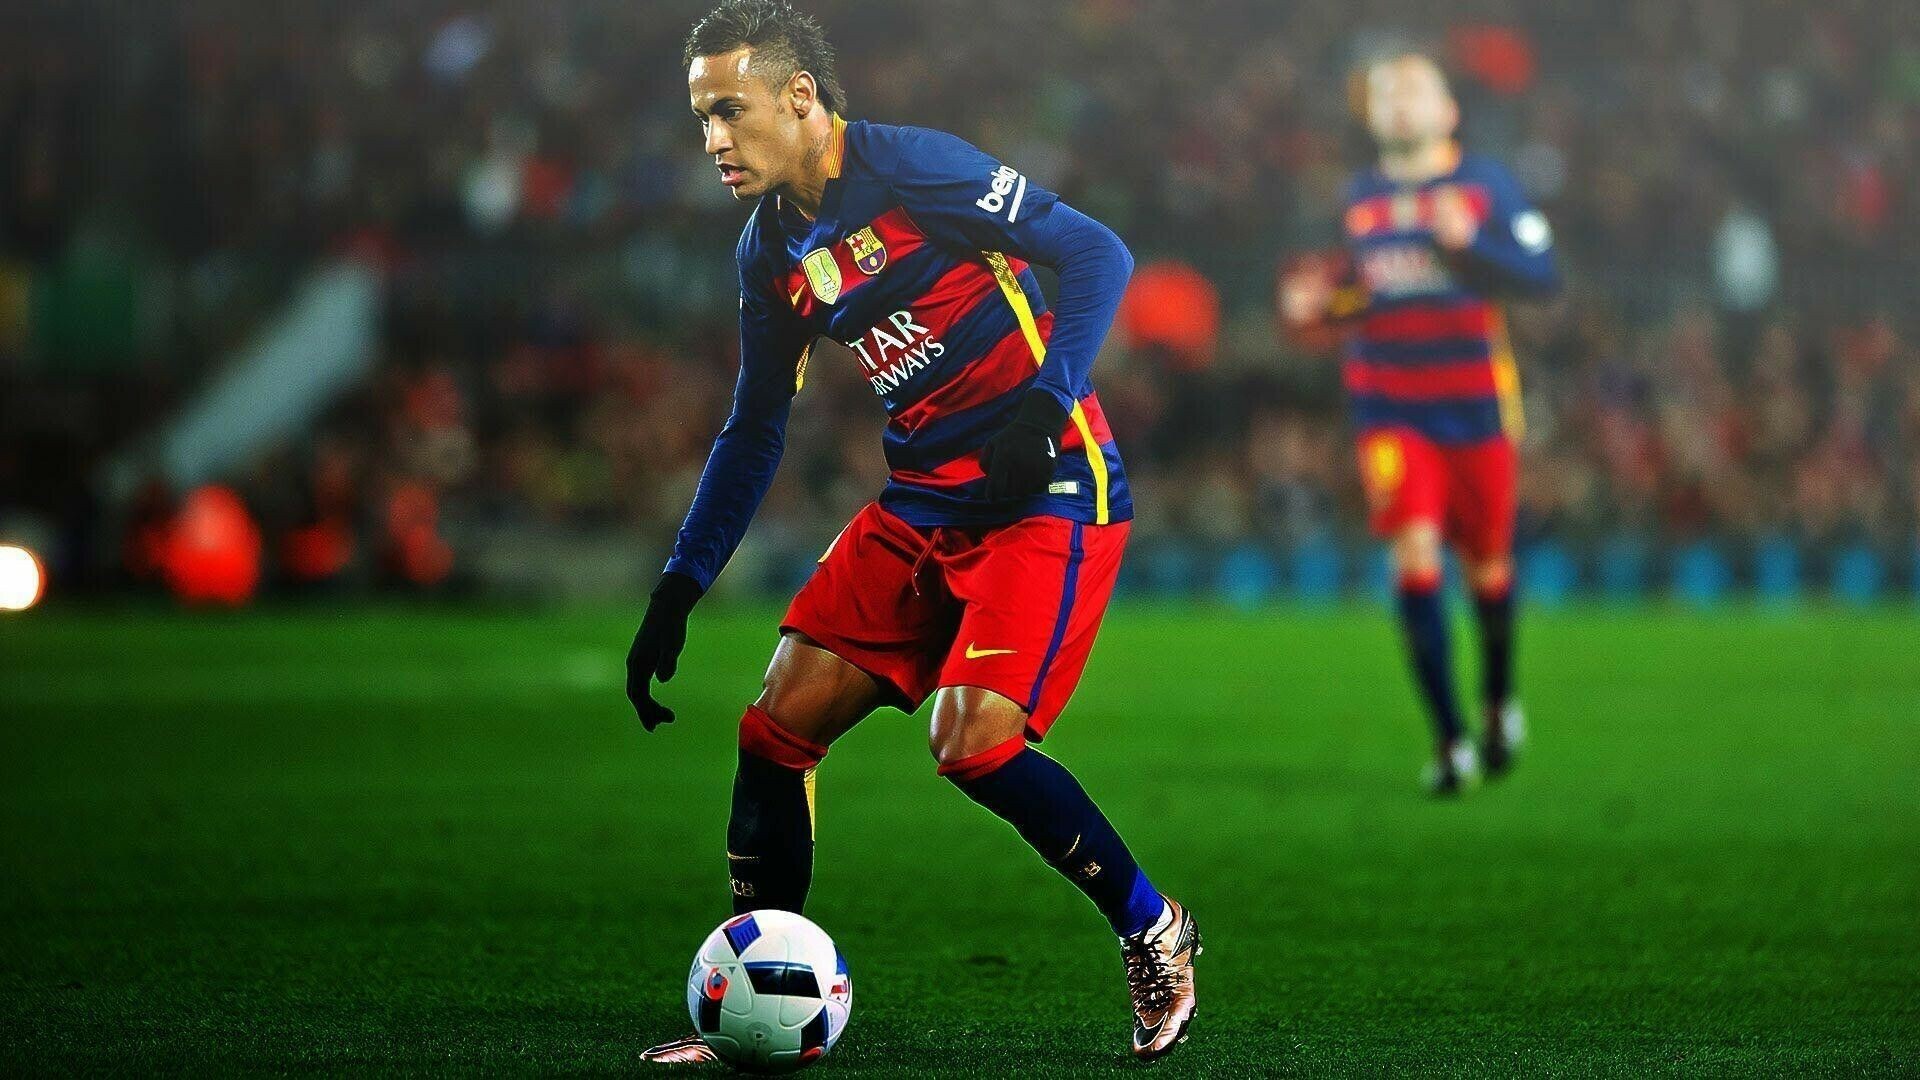 Neymar: He won the 2012 South American Footballer of the Year award. 1920x1080 Full HD Wallpaper.